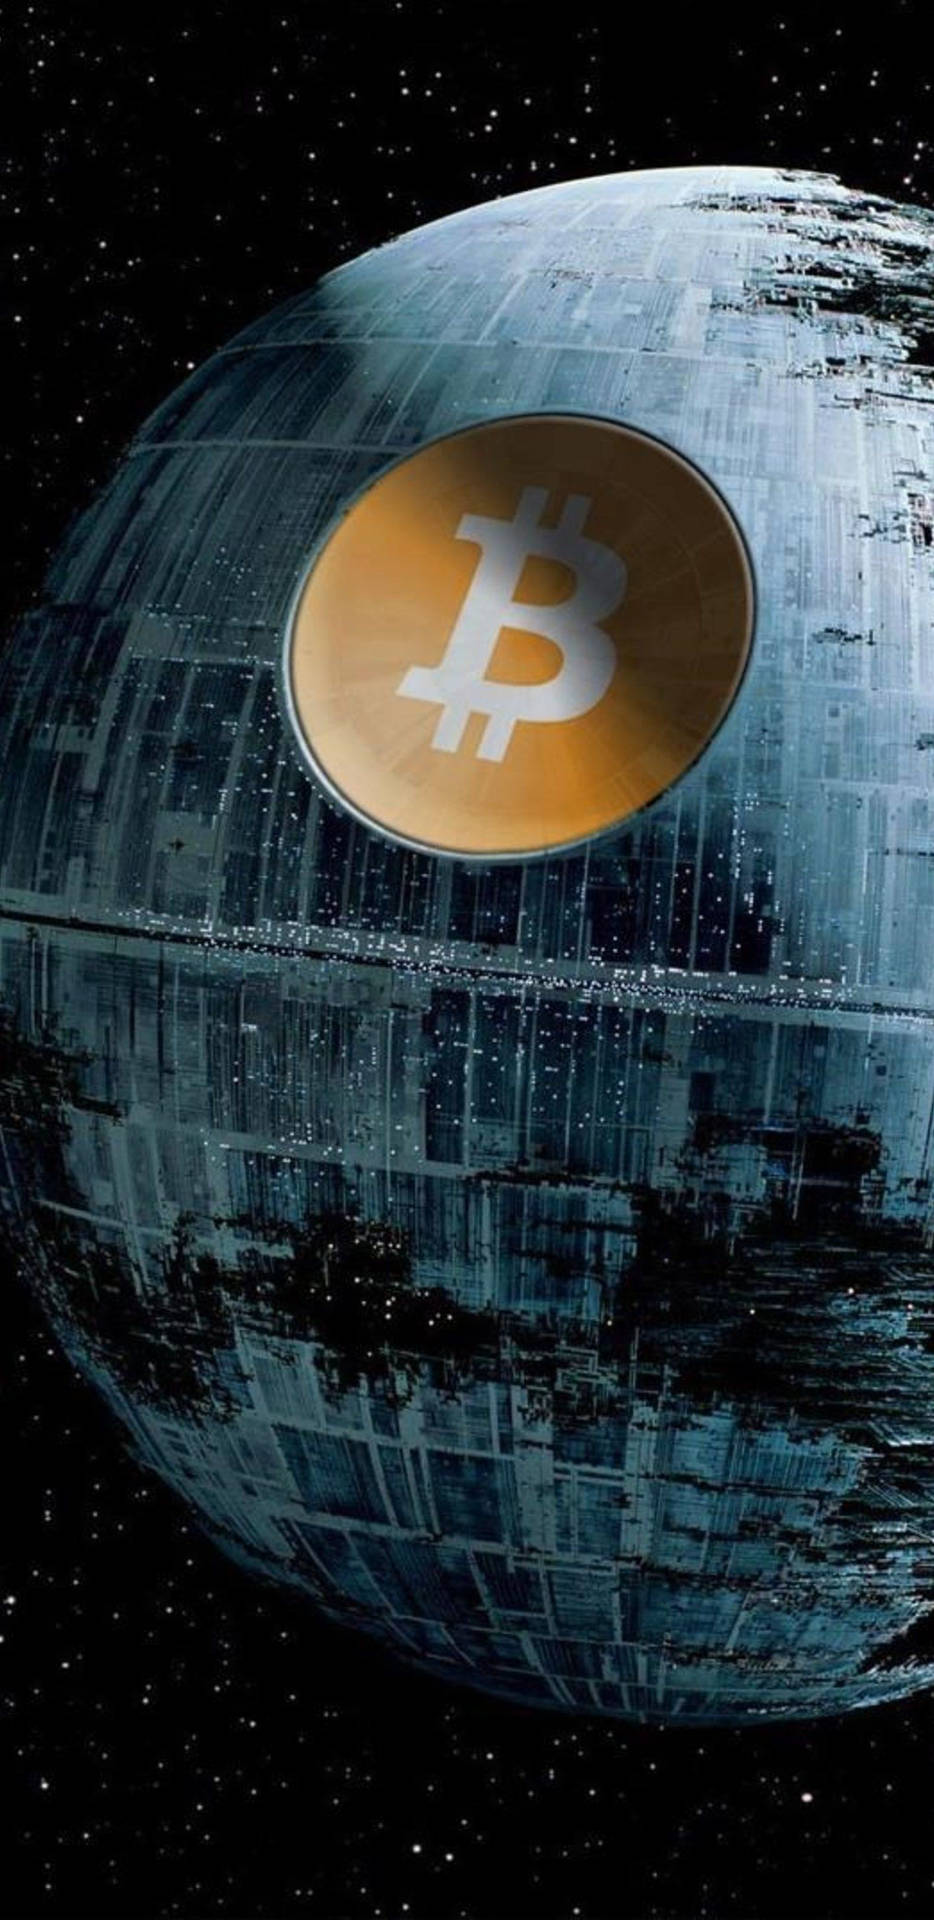 Join Blockchain’s Bitcoin Revolution Background